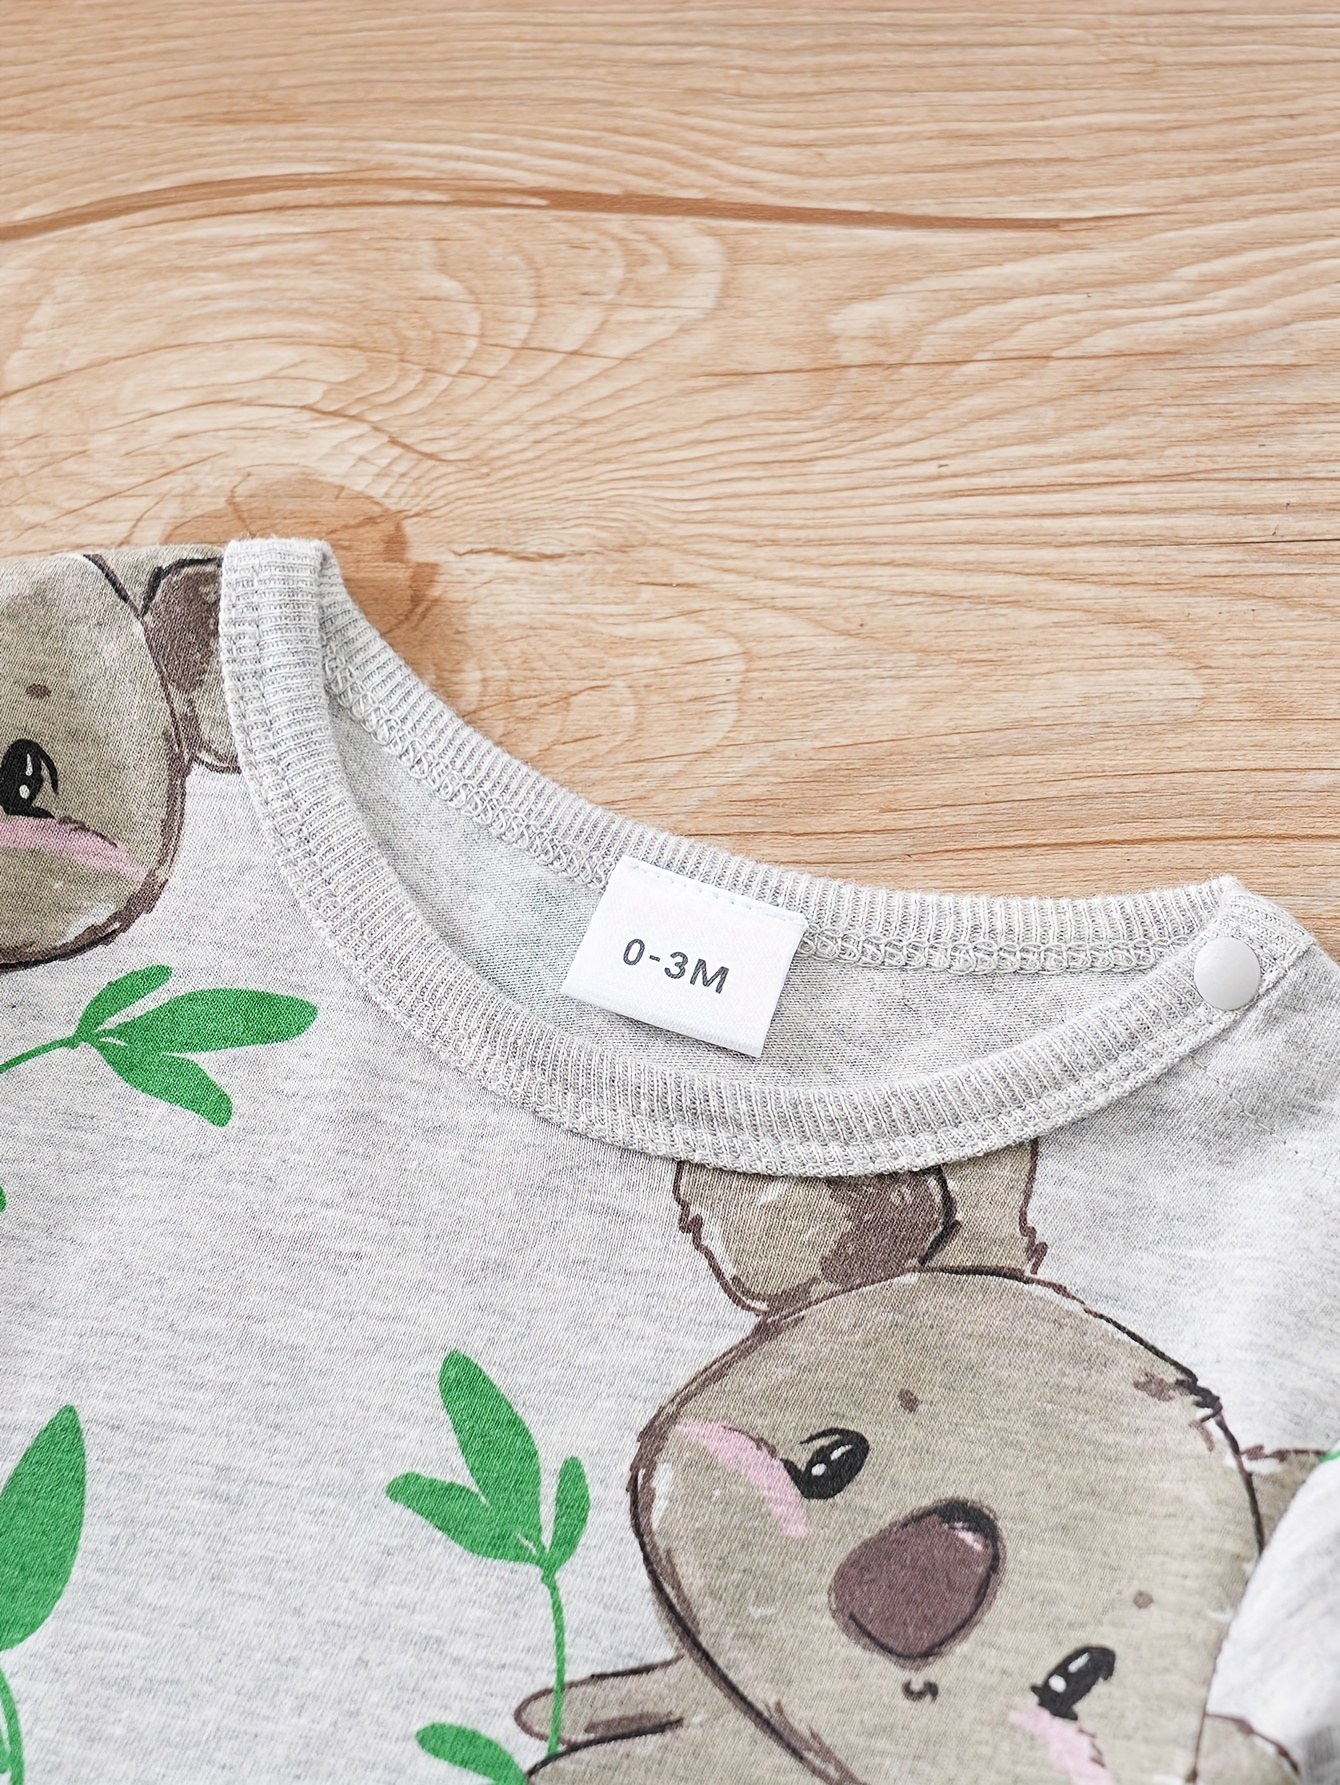 Camiseta manga corta negra para bebé diseño Koala